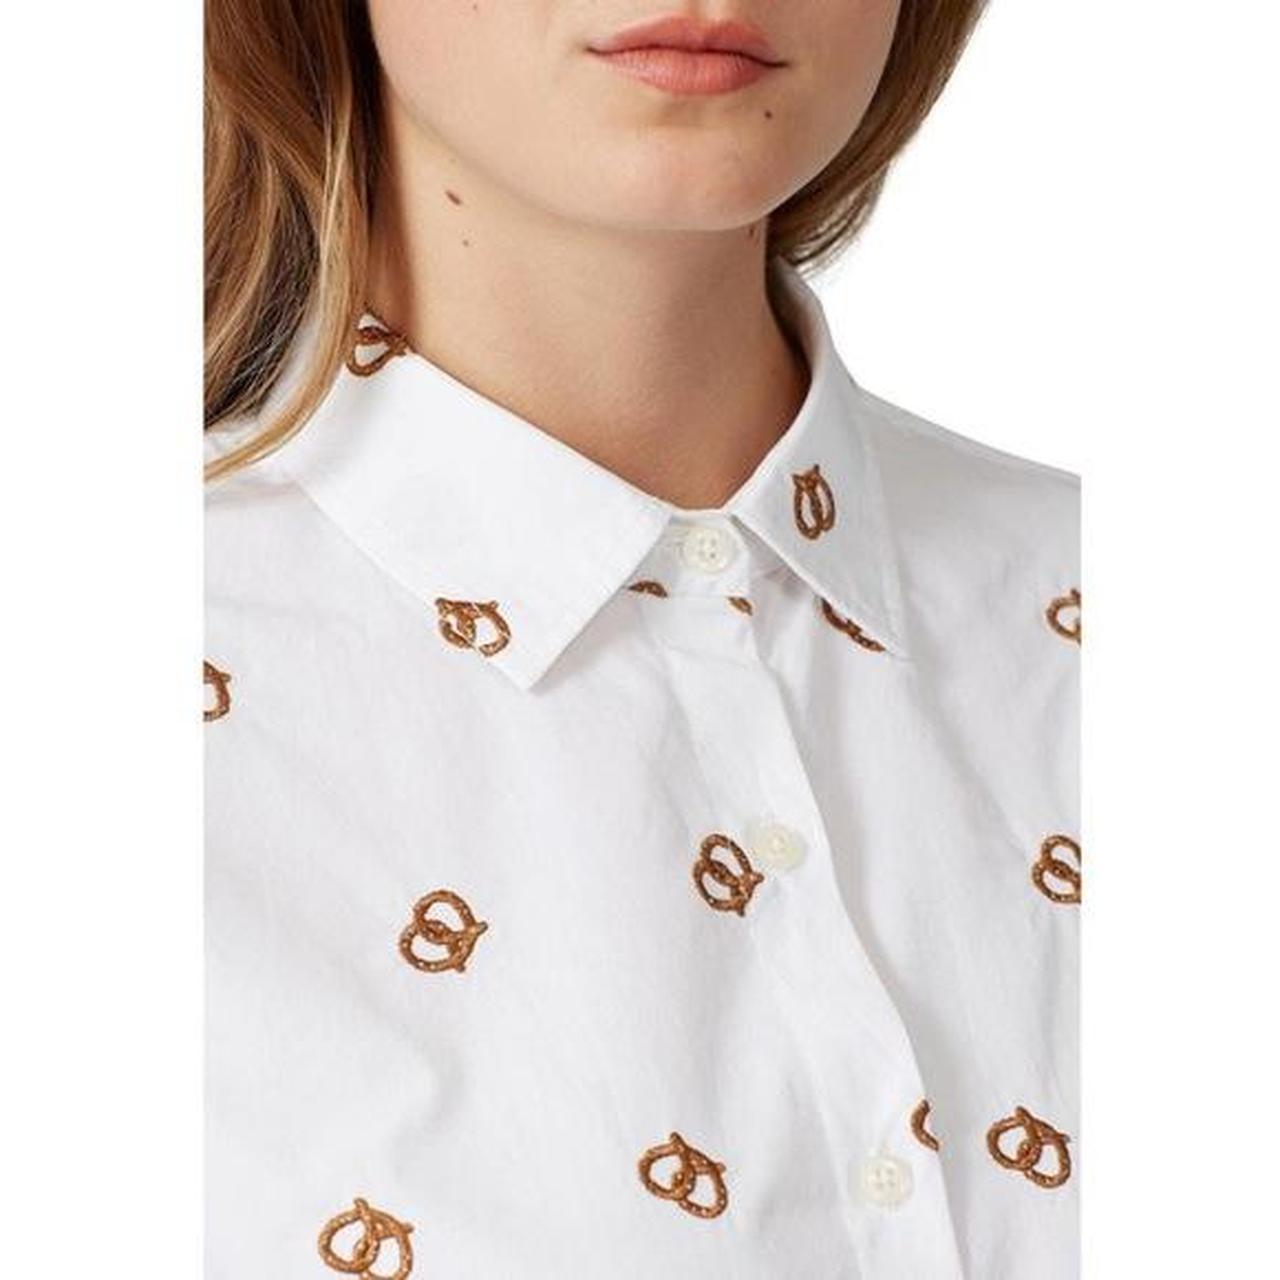 KULE Women's White and Brown Shirt